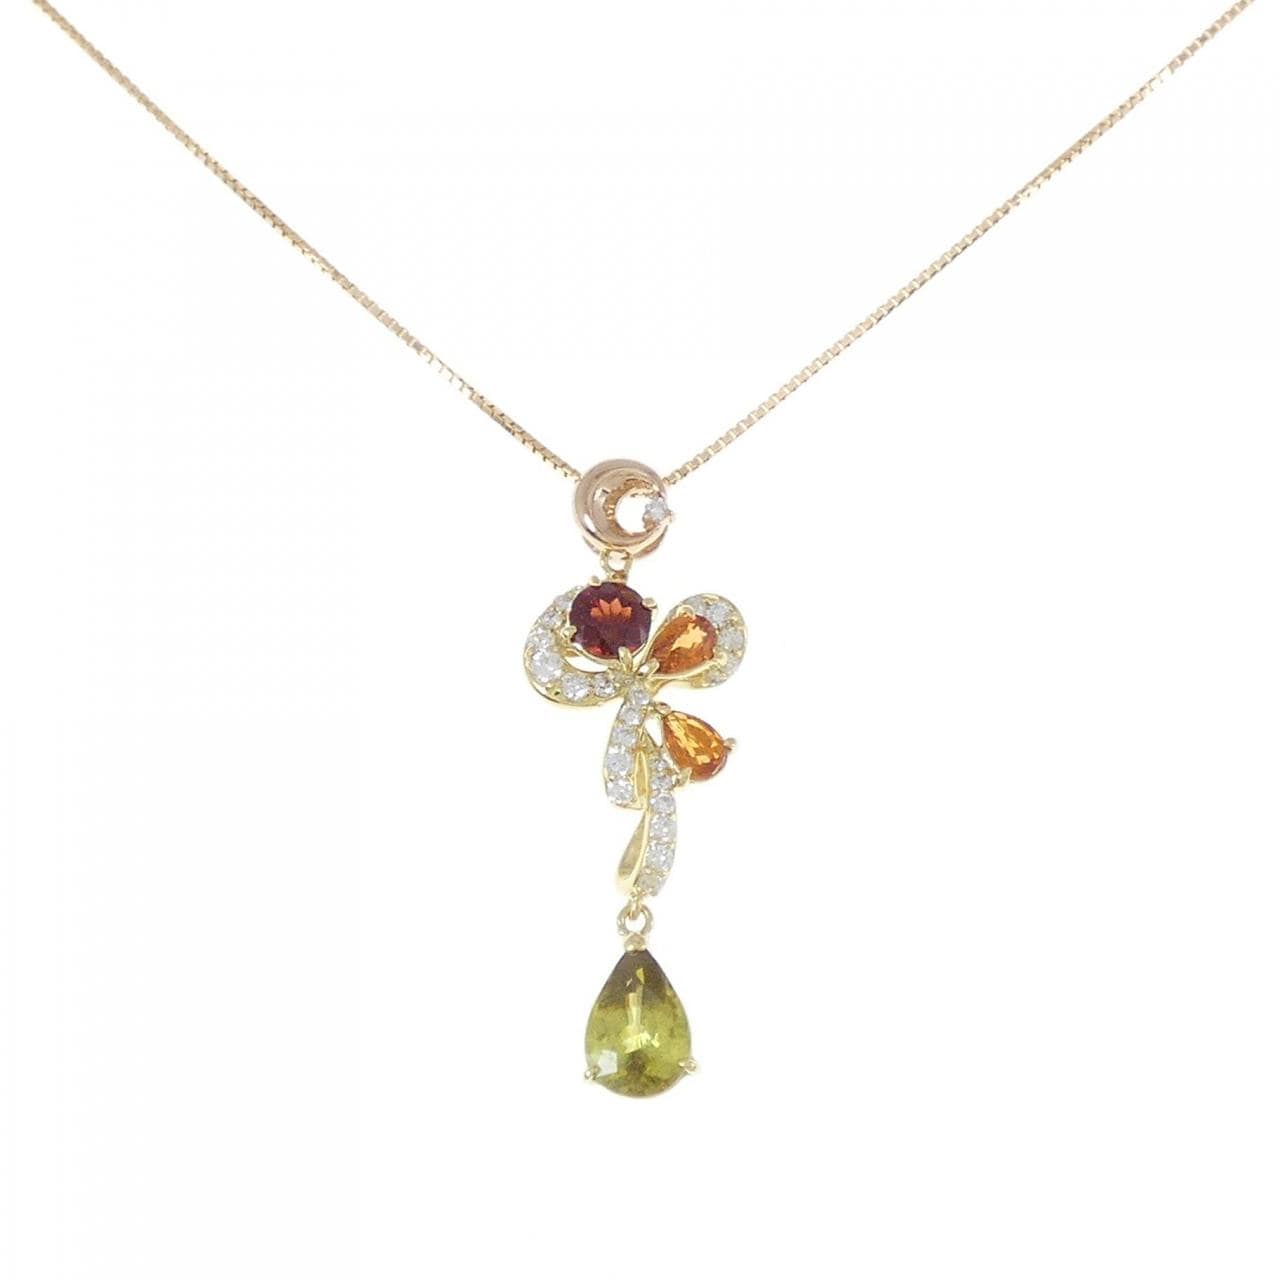 K18YG/K18PG colored stone necklace